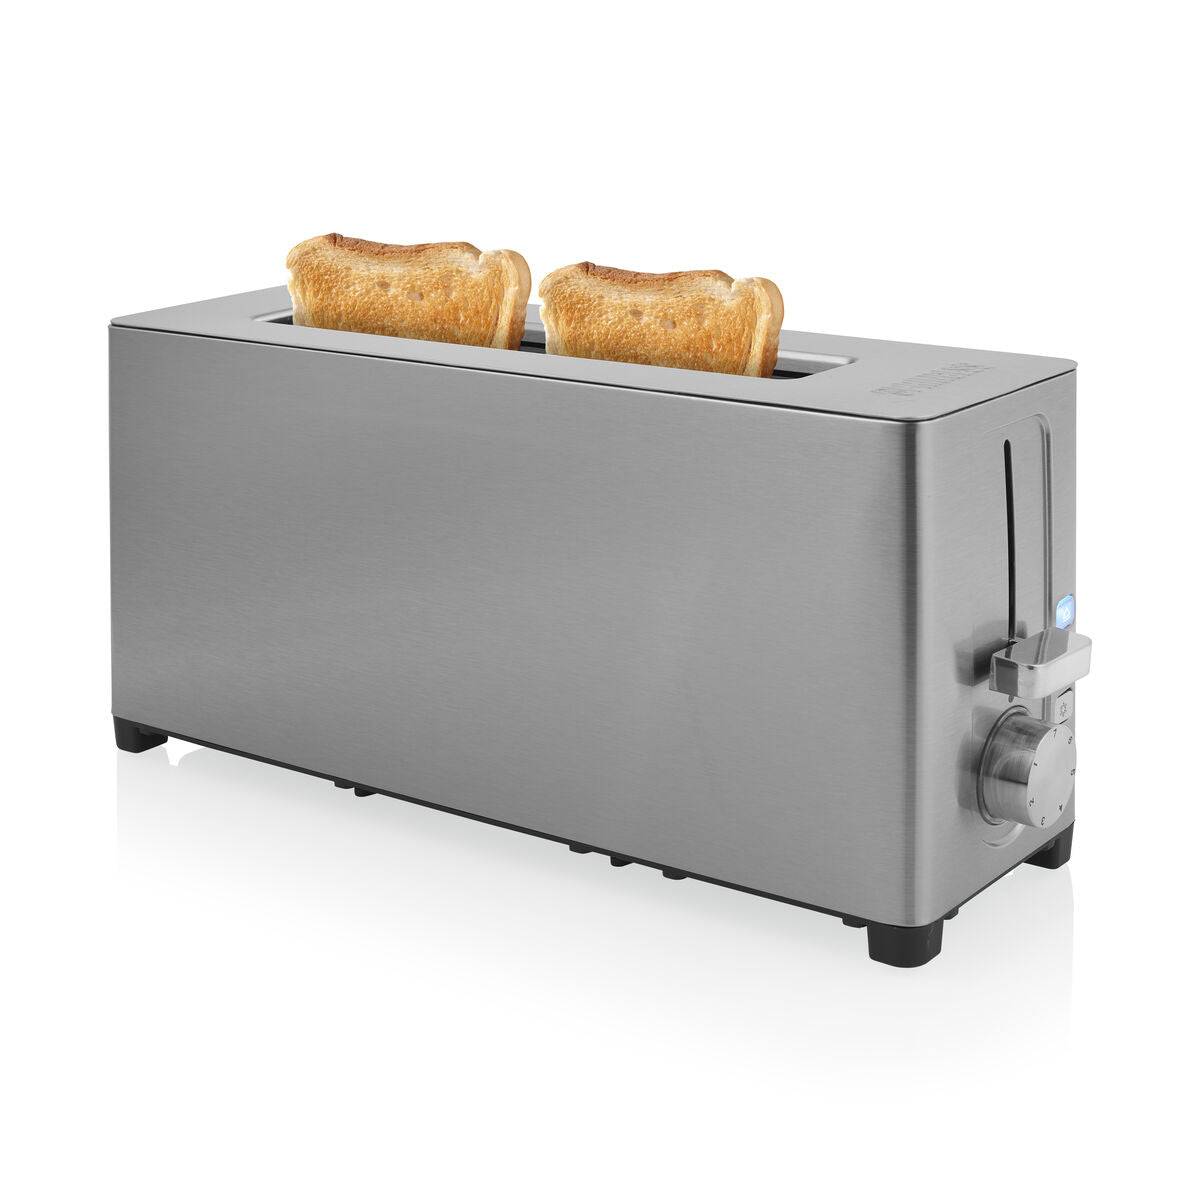 Kaufe Toaster Princess 142401 Edelstahl 1050 W bei AWK Flagship um € 64.00